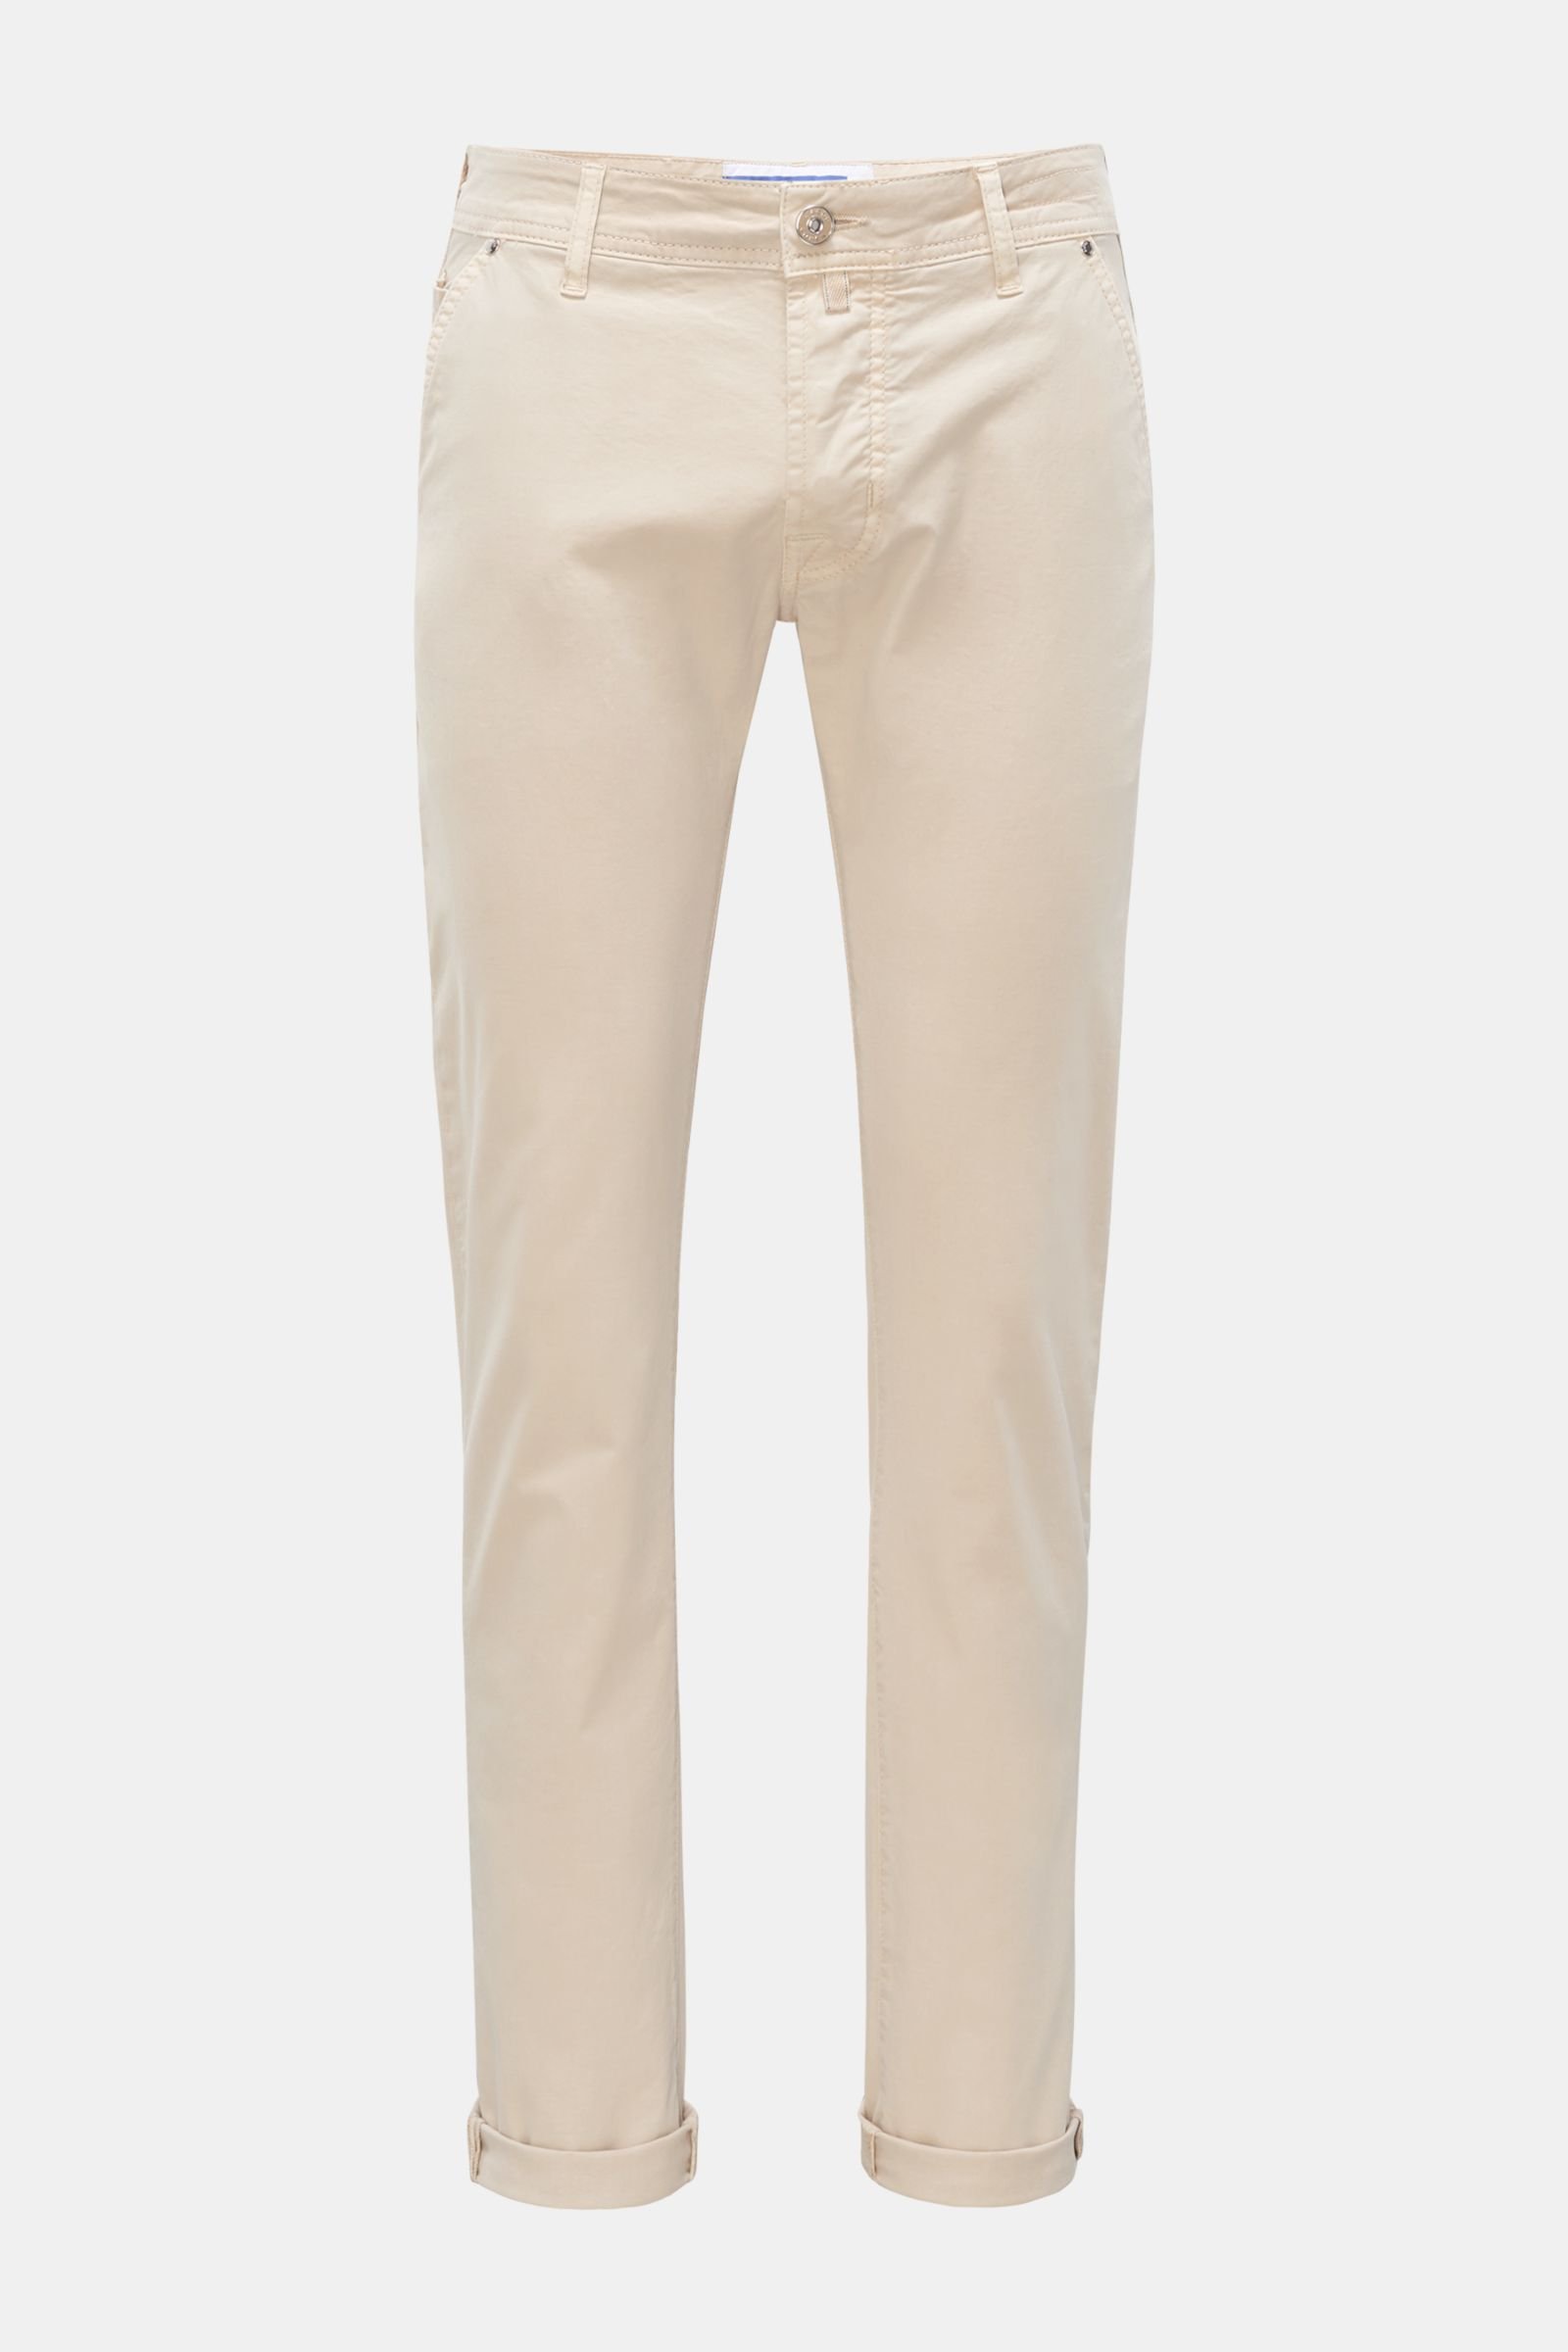 Cotton trousers 'Leonard' cream (formerly J613)